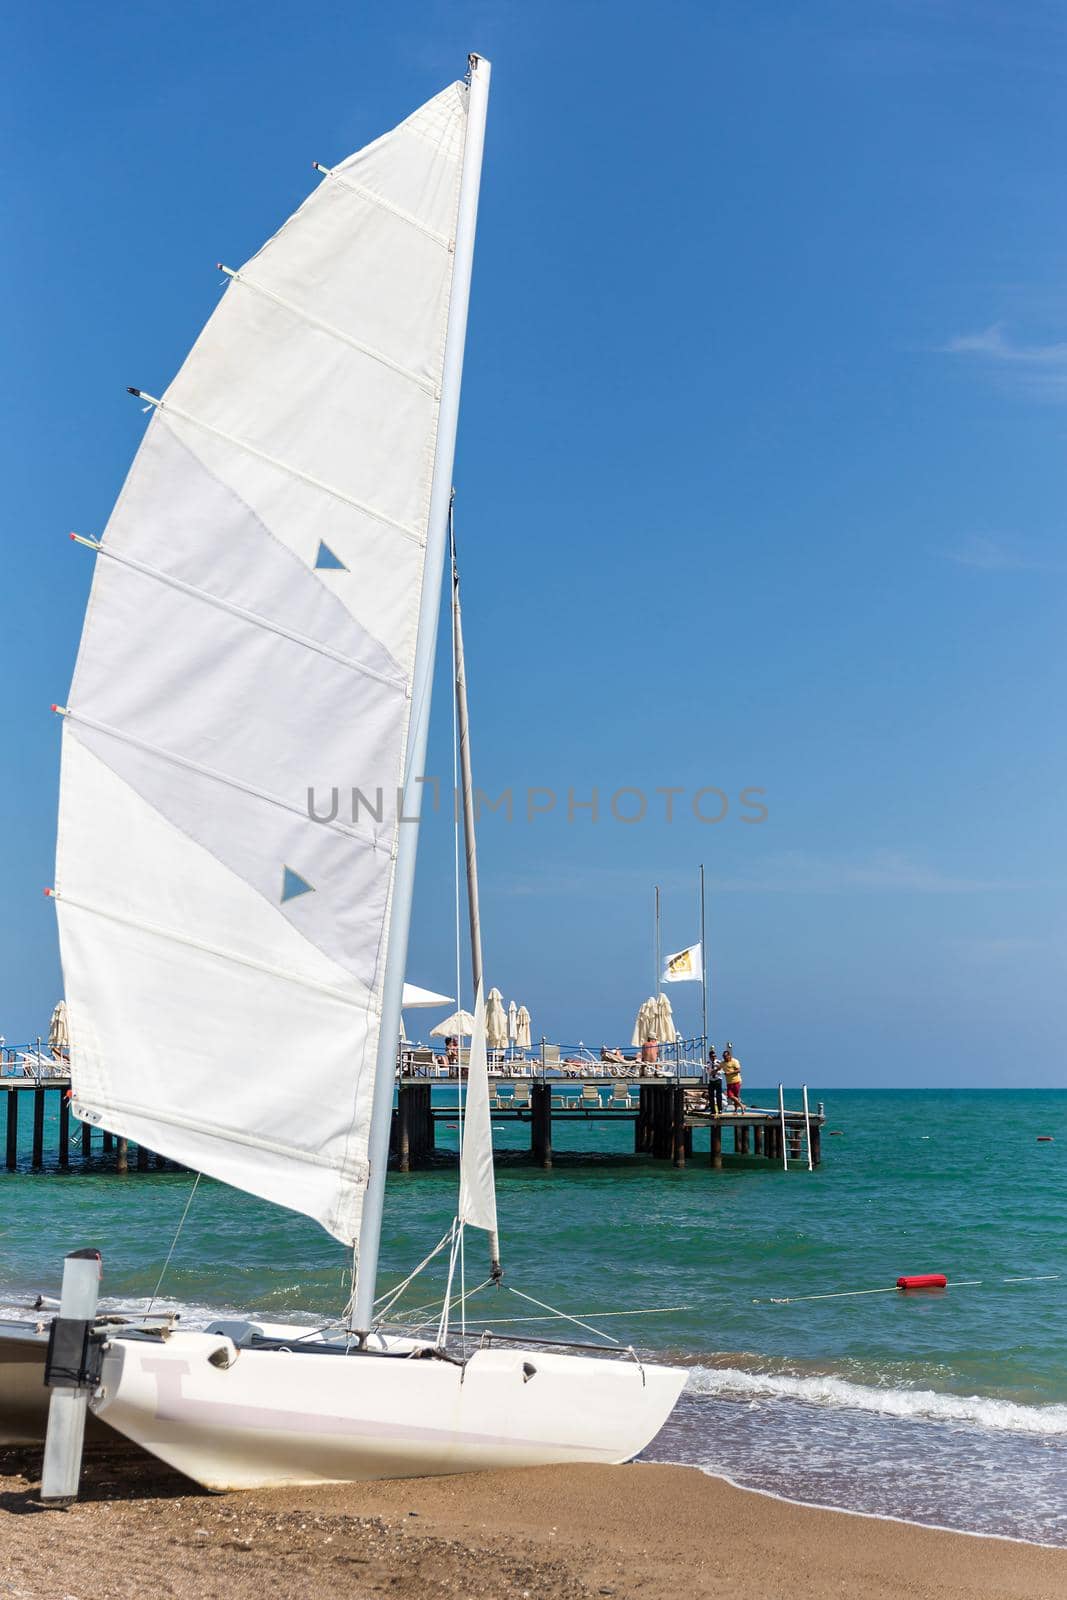 A sunny, breezy sea is perfect for a catamaran sail